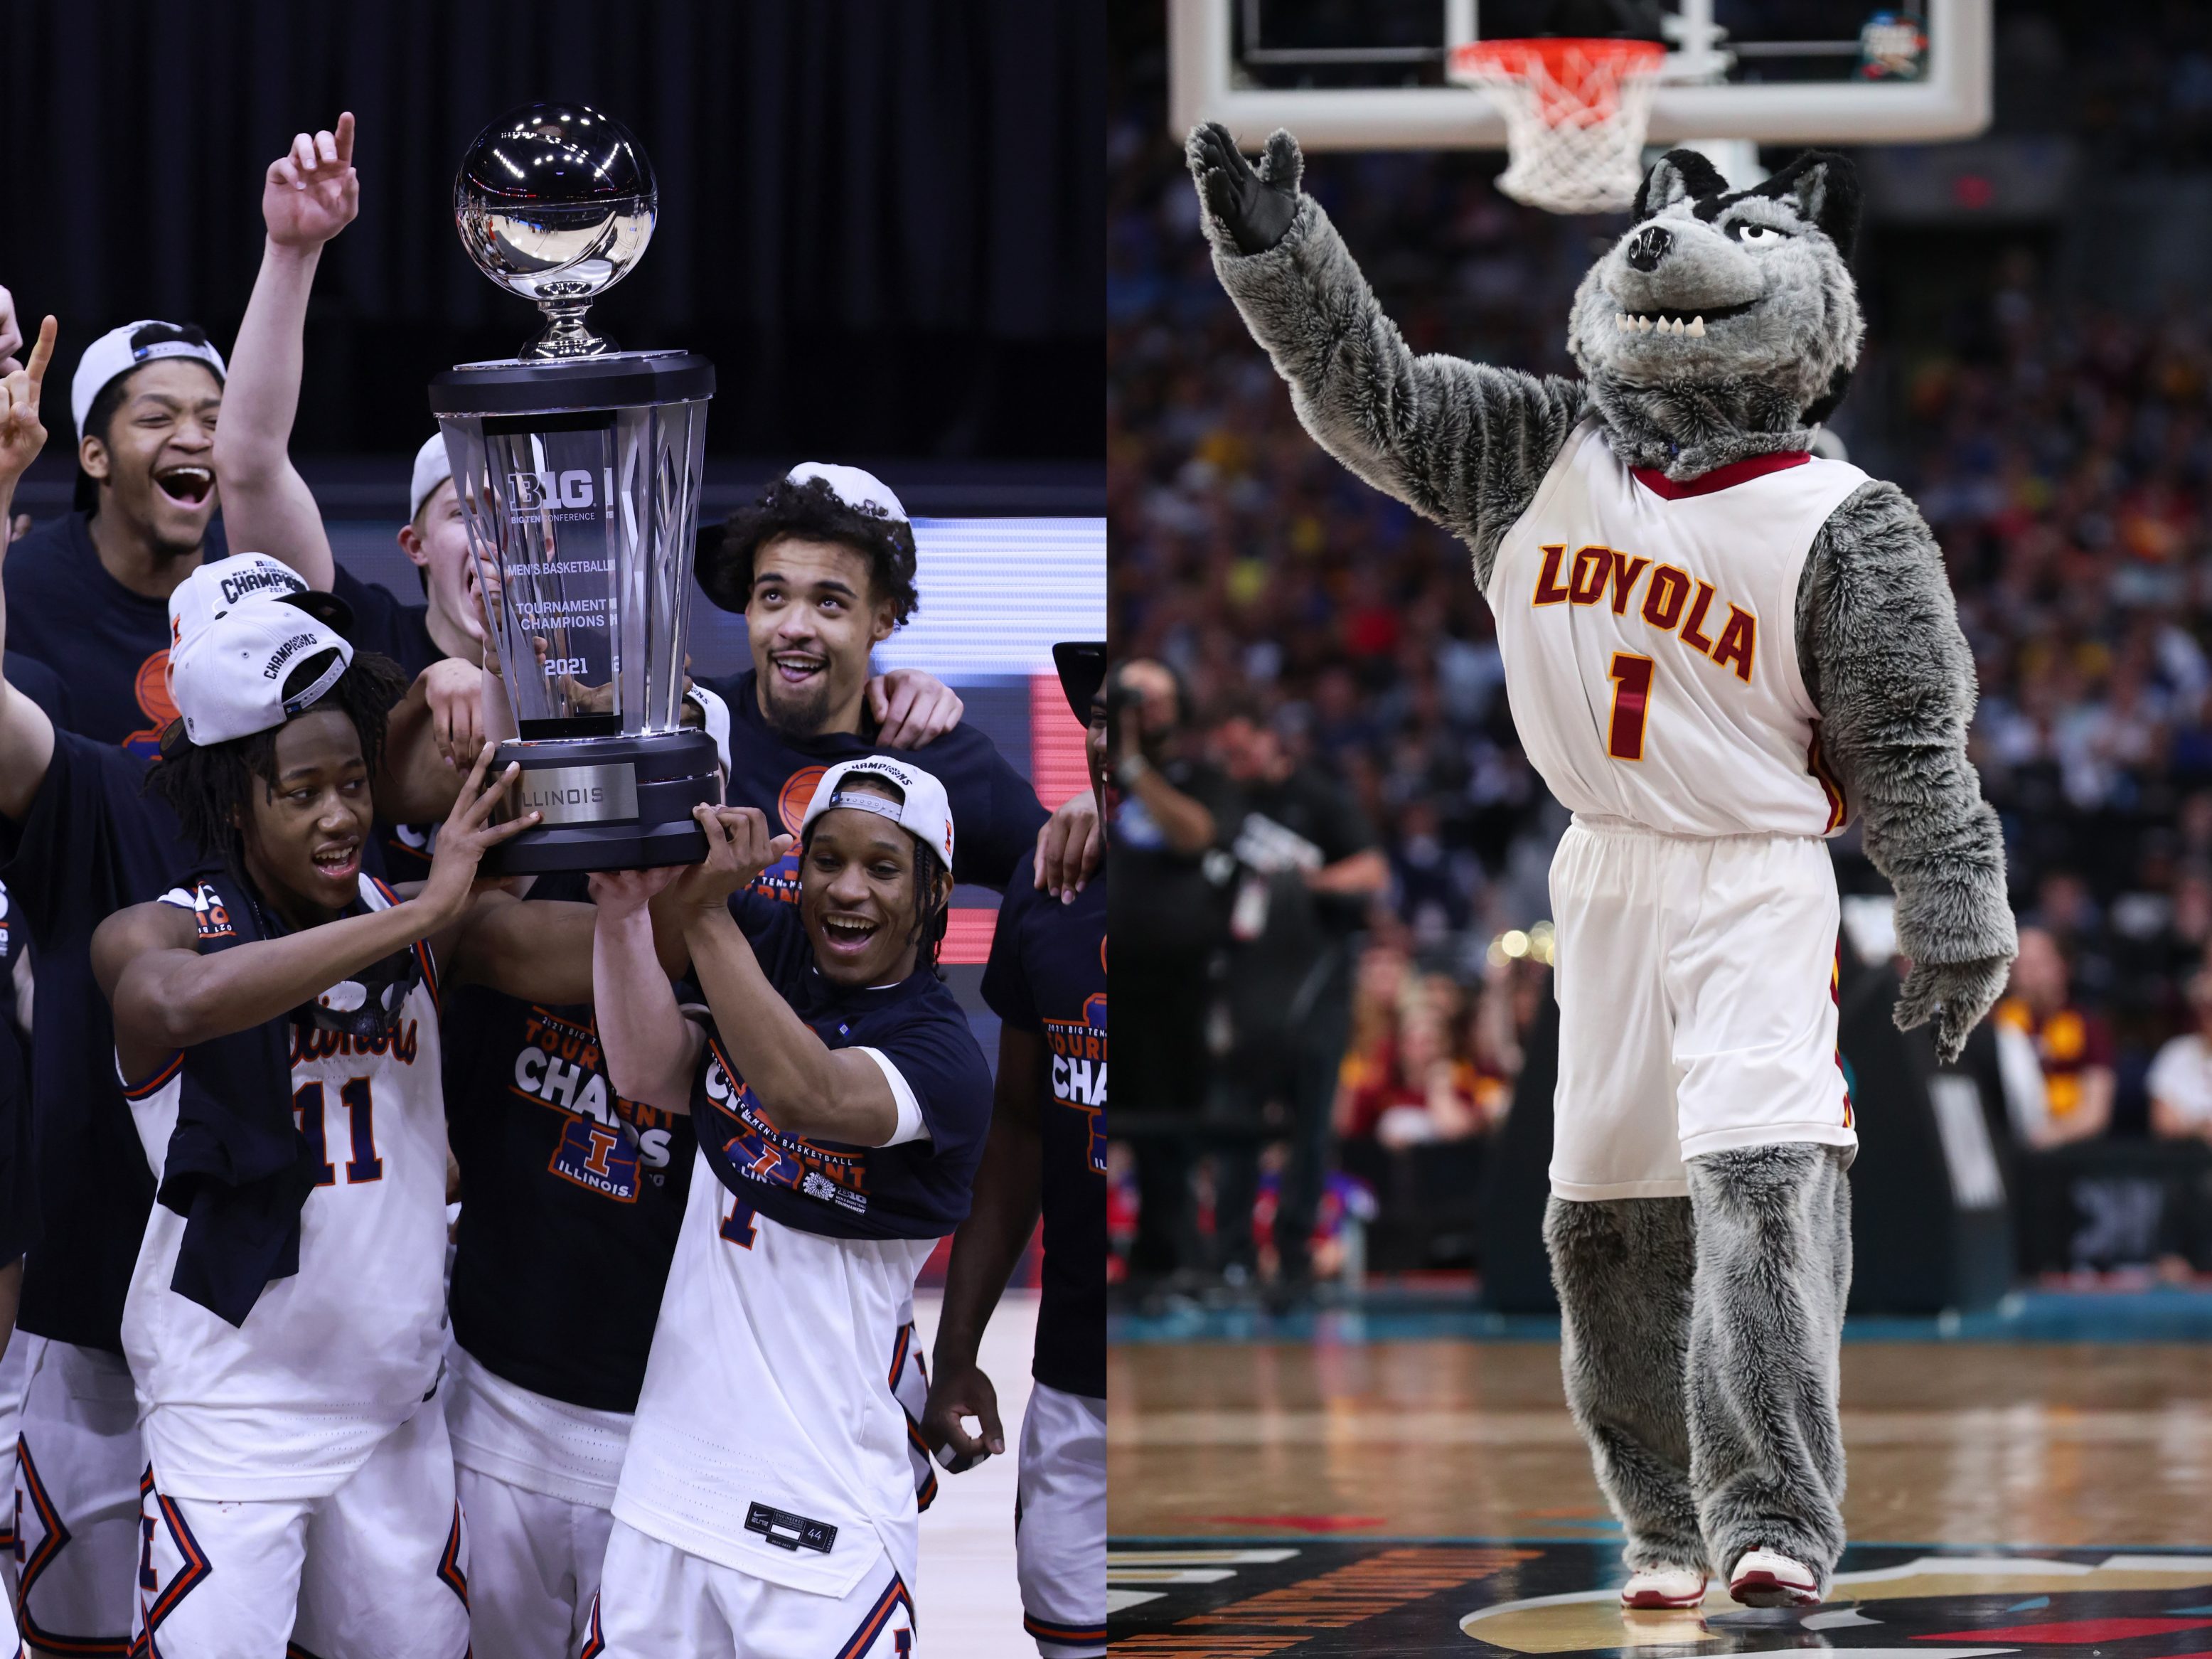 illinois basketball team and loyola chicago mascot